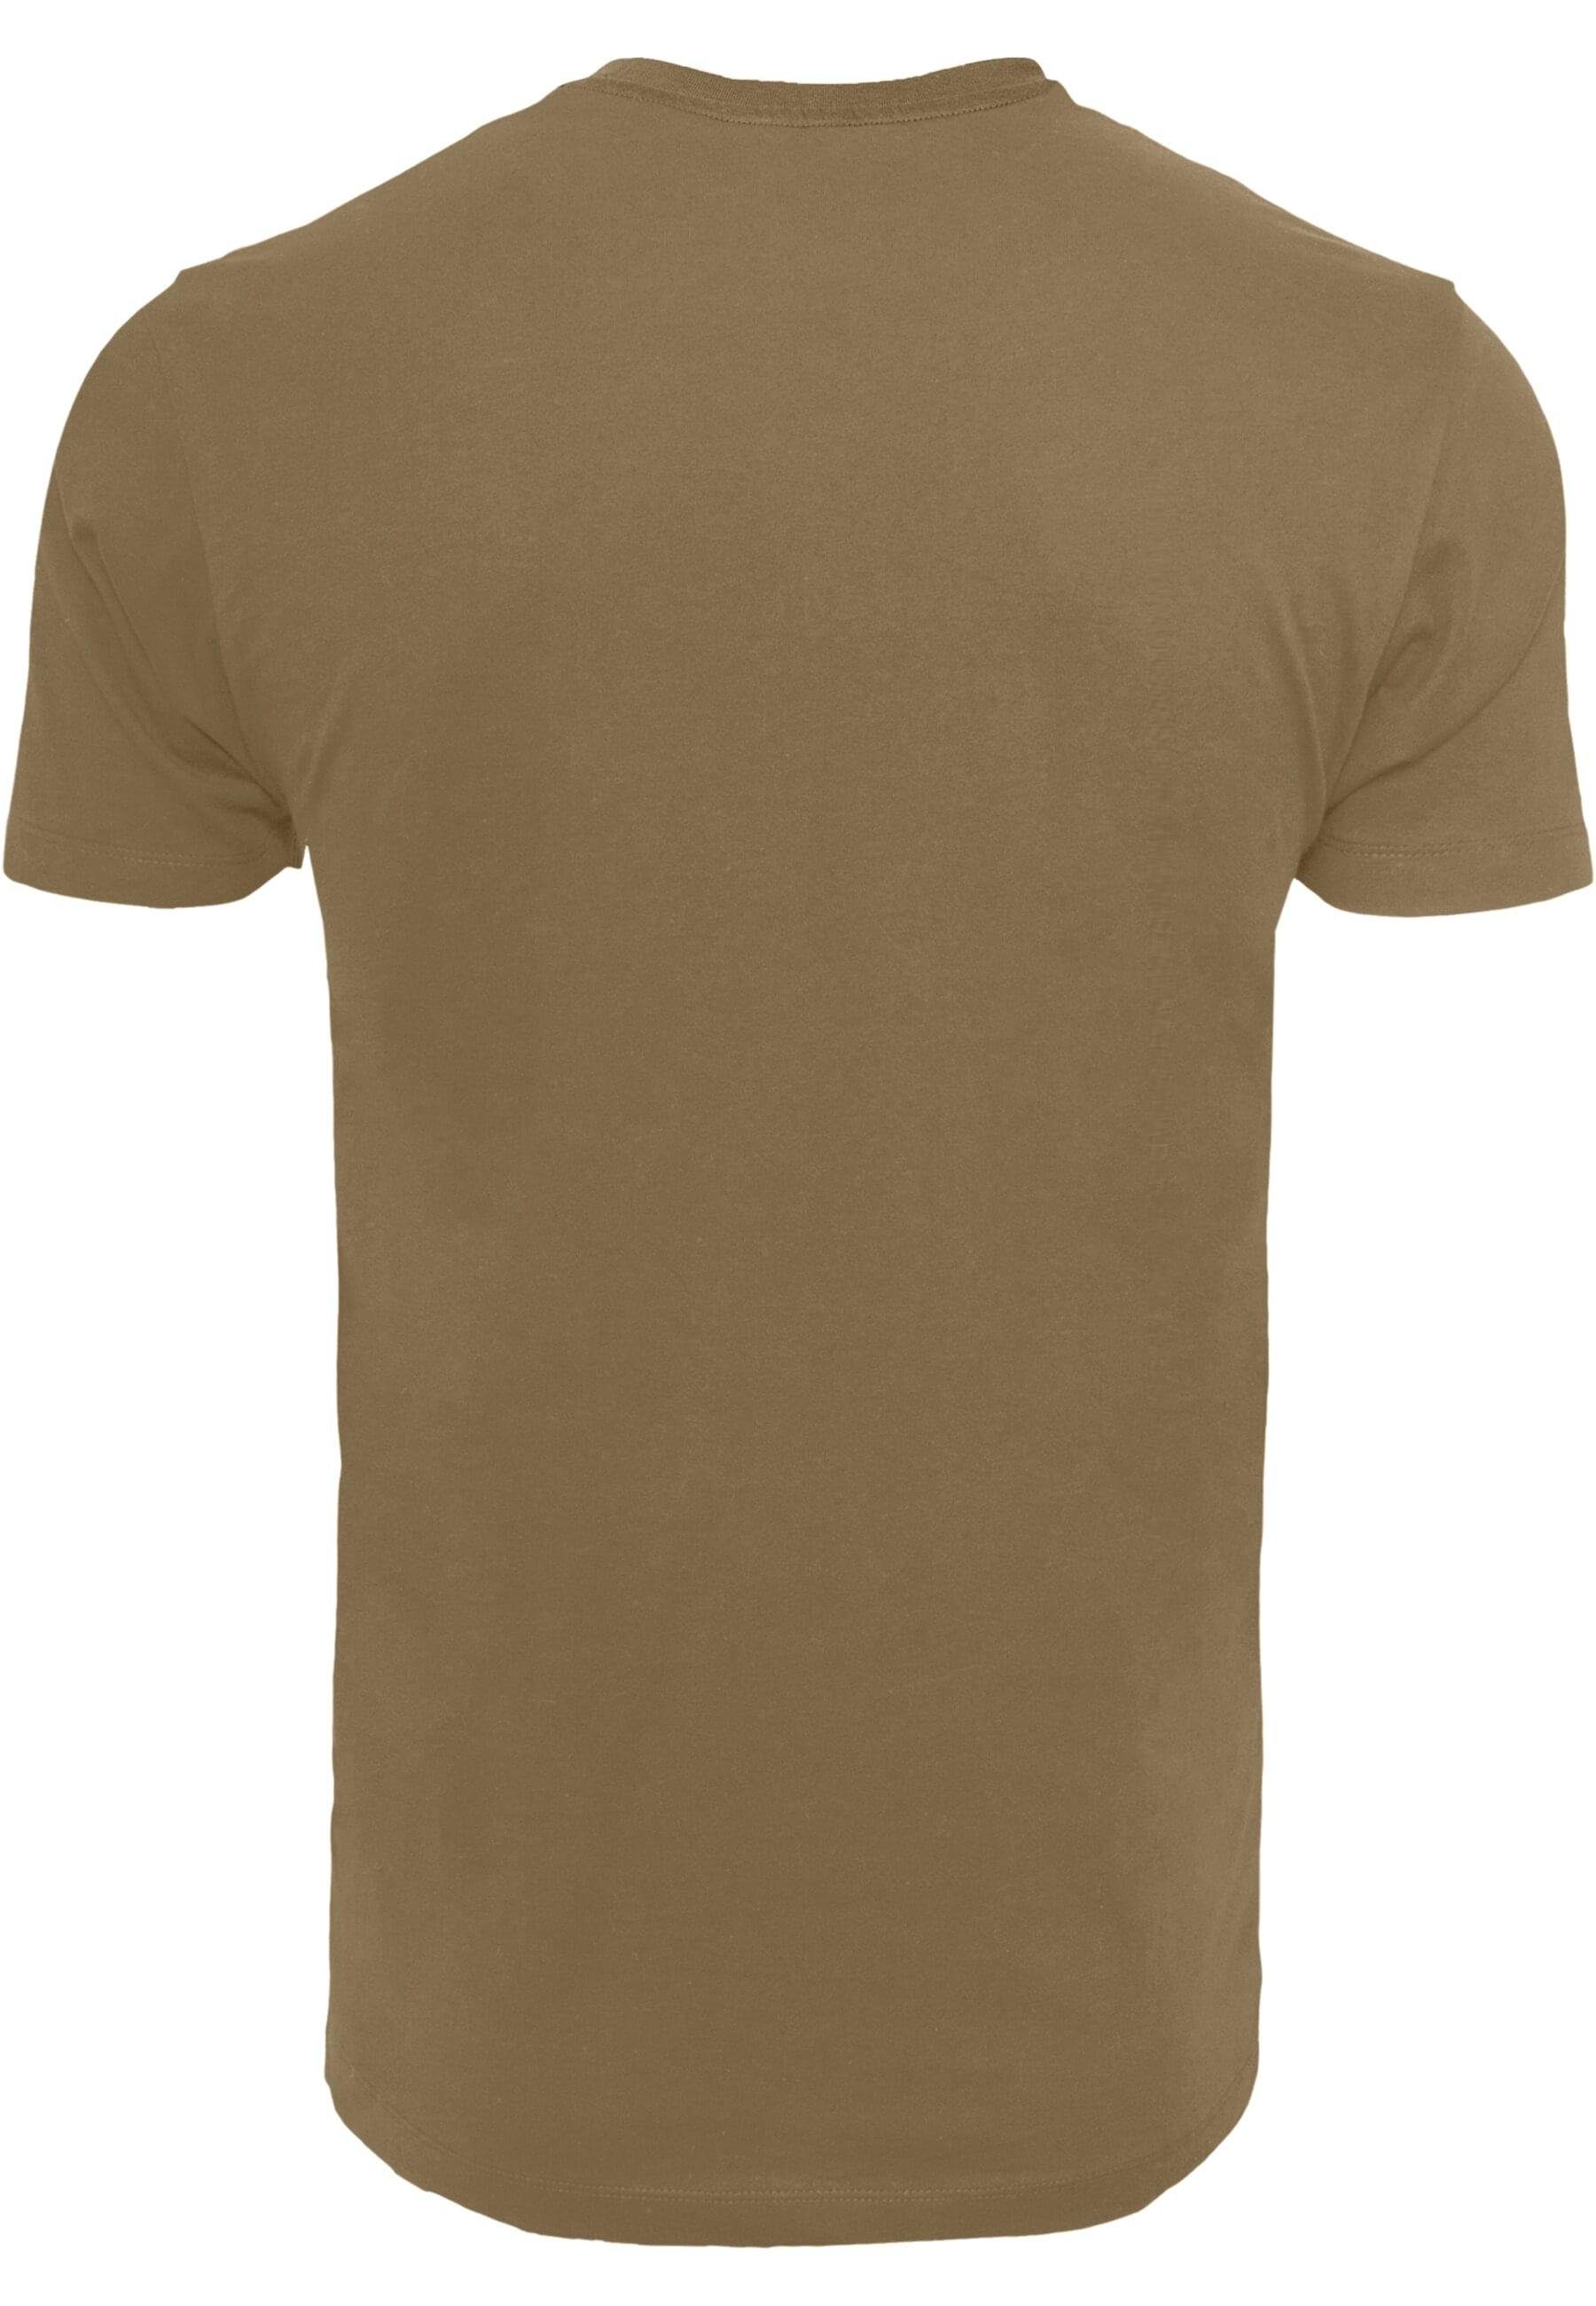 Merchcode T-Shirt Herren I Love Layla X T-Shirt (1-tlg)